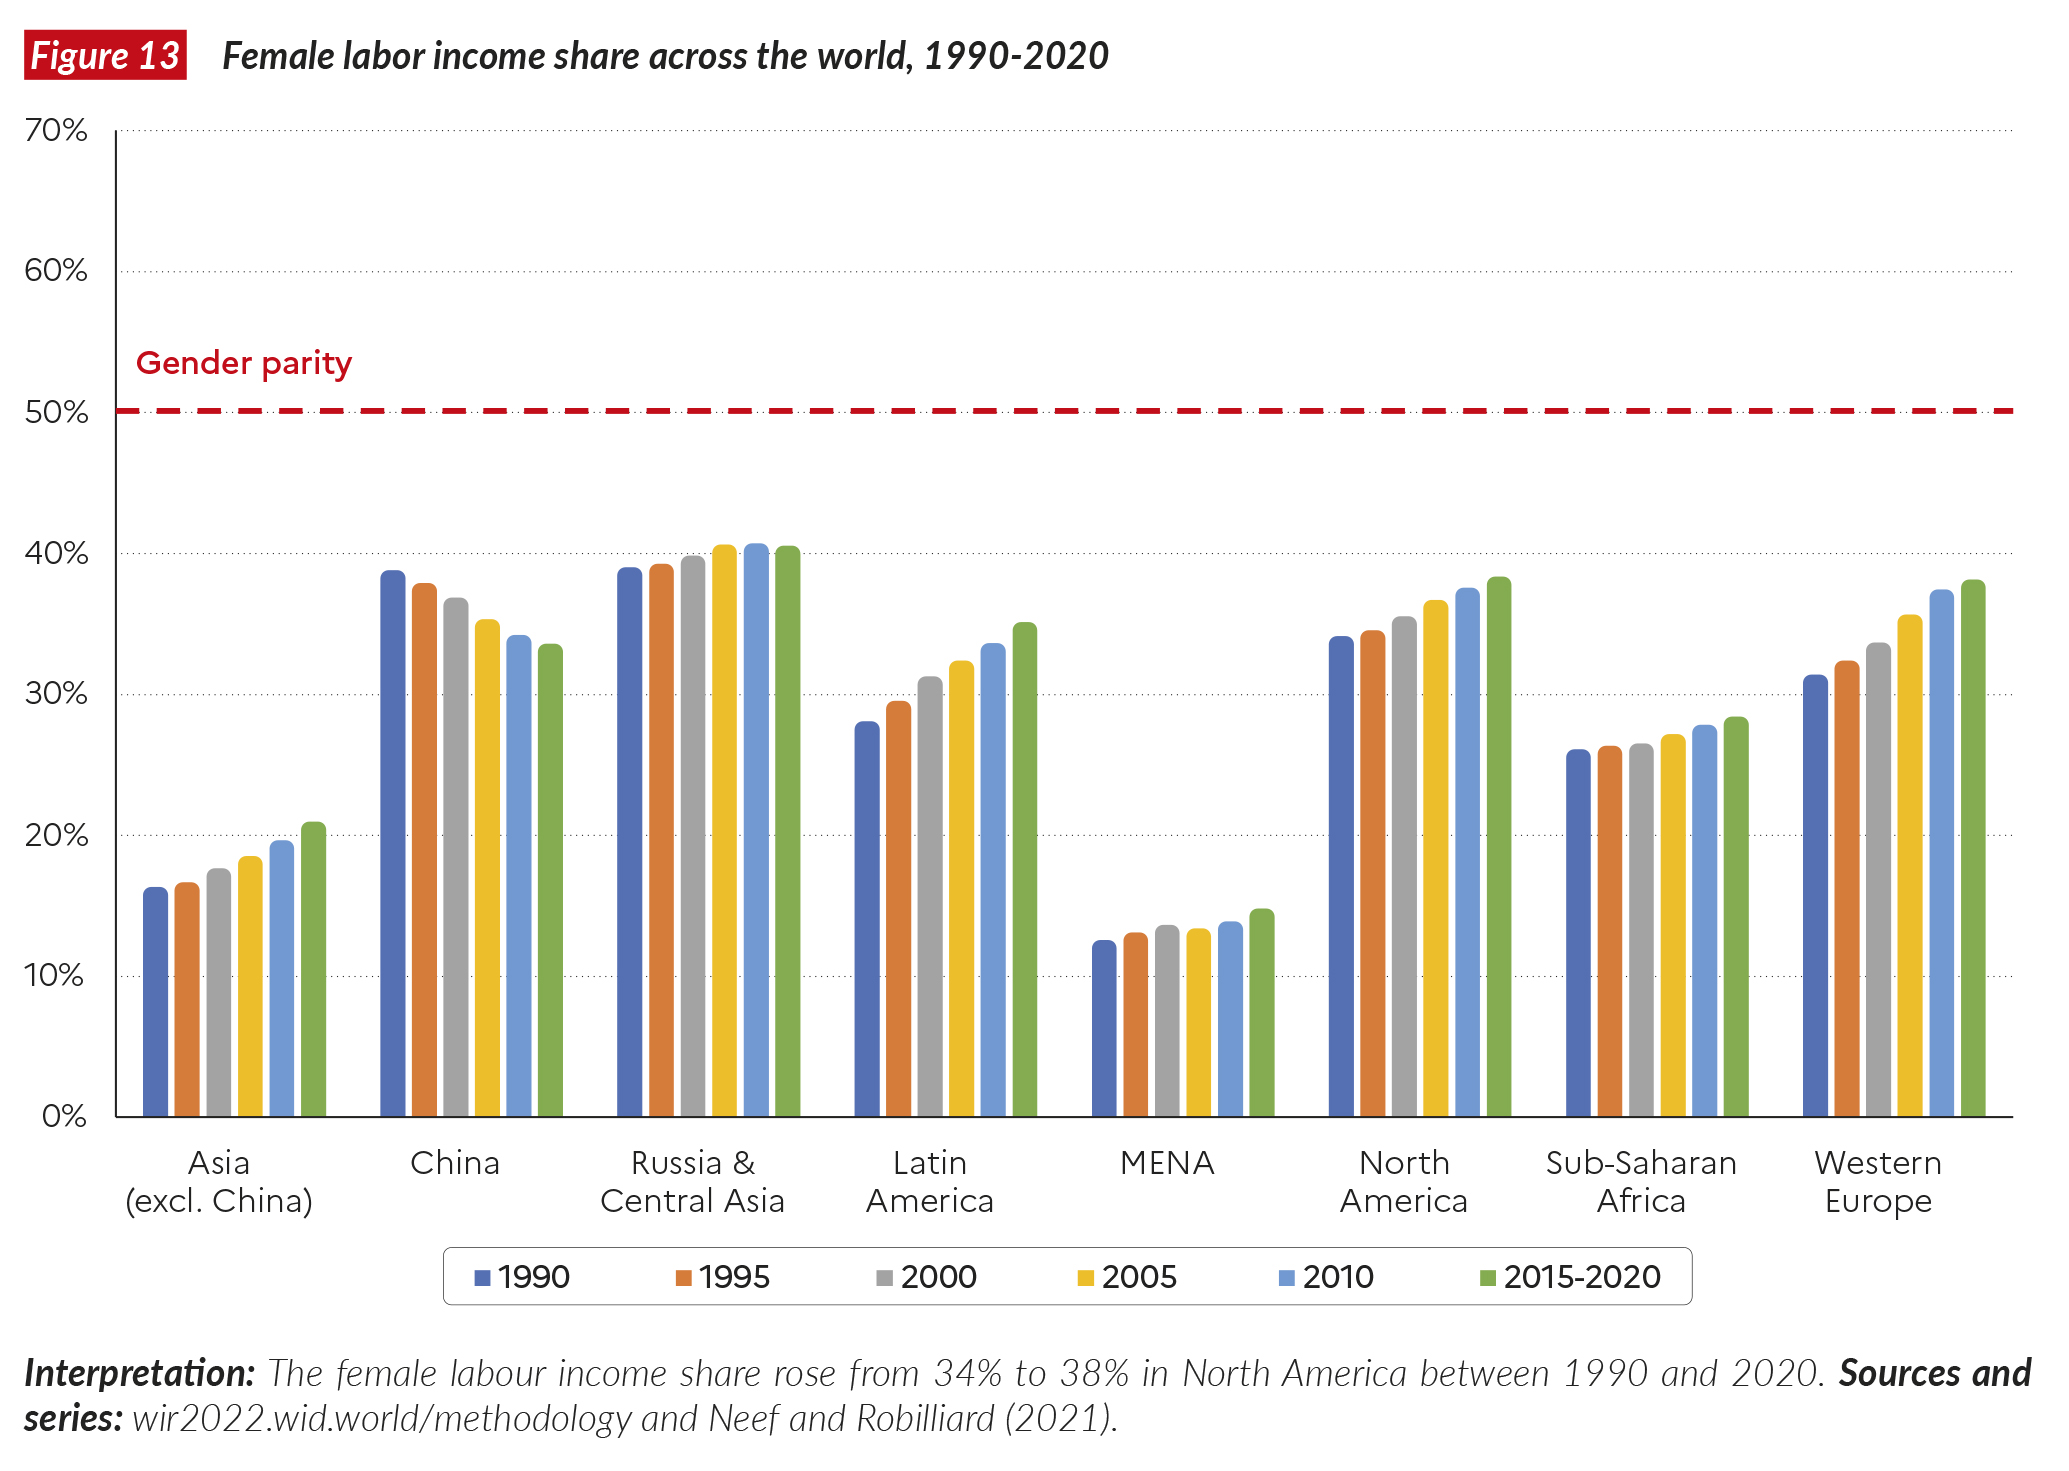 F13. Female labor income share across the world 1990-2020